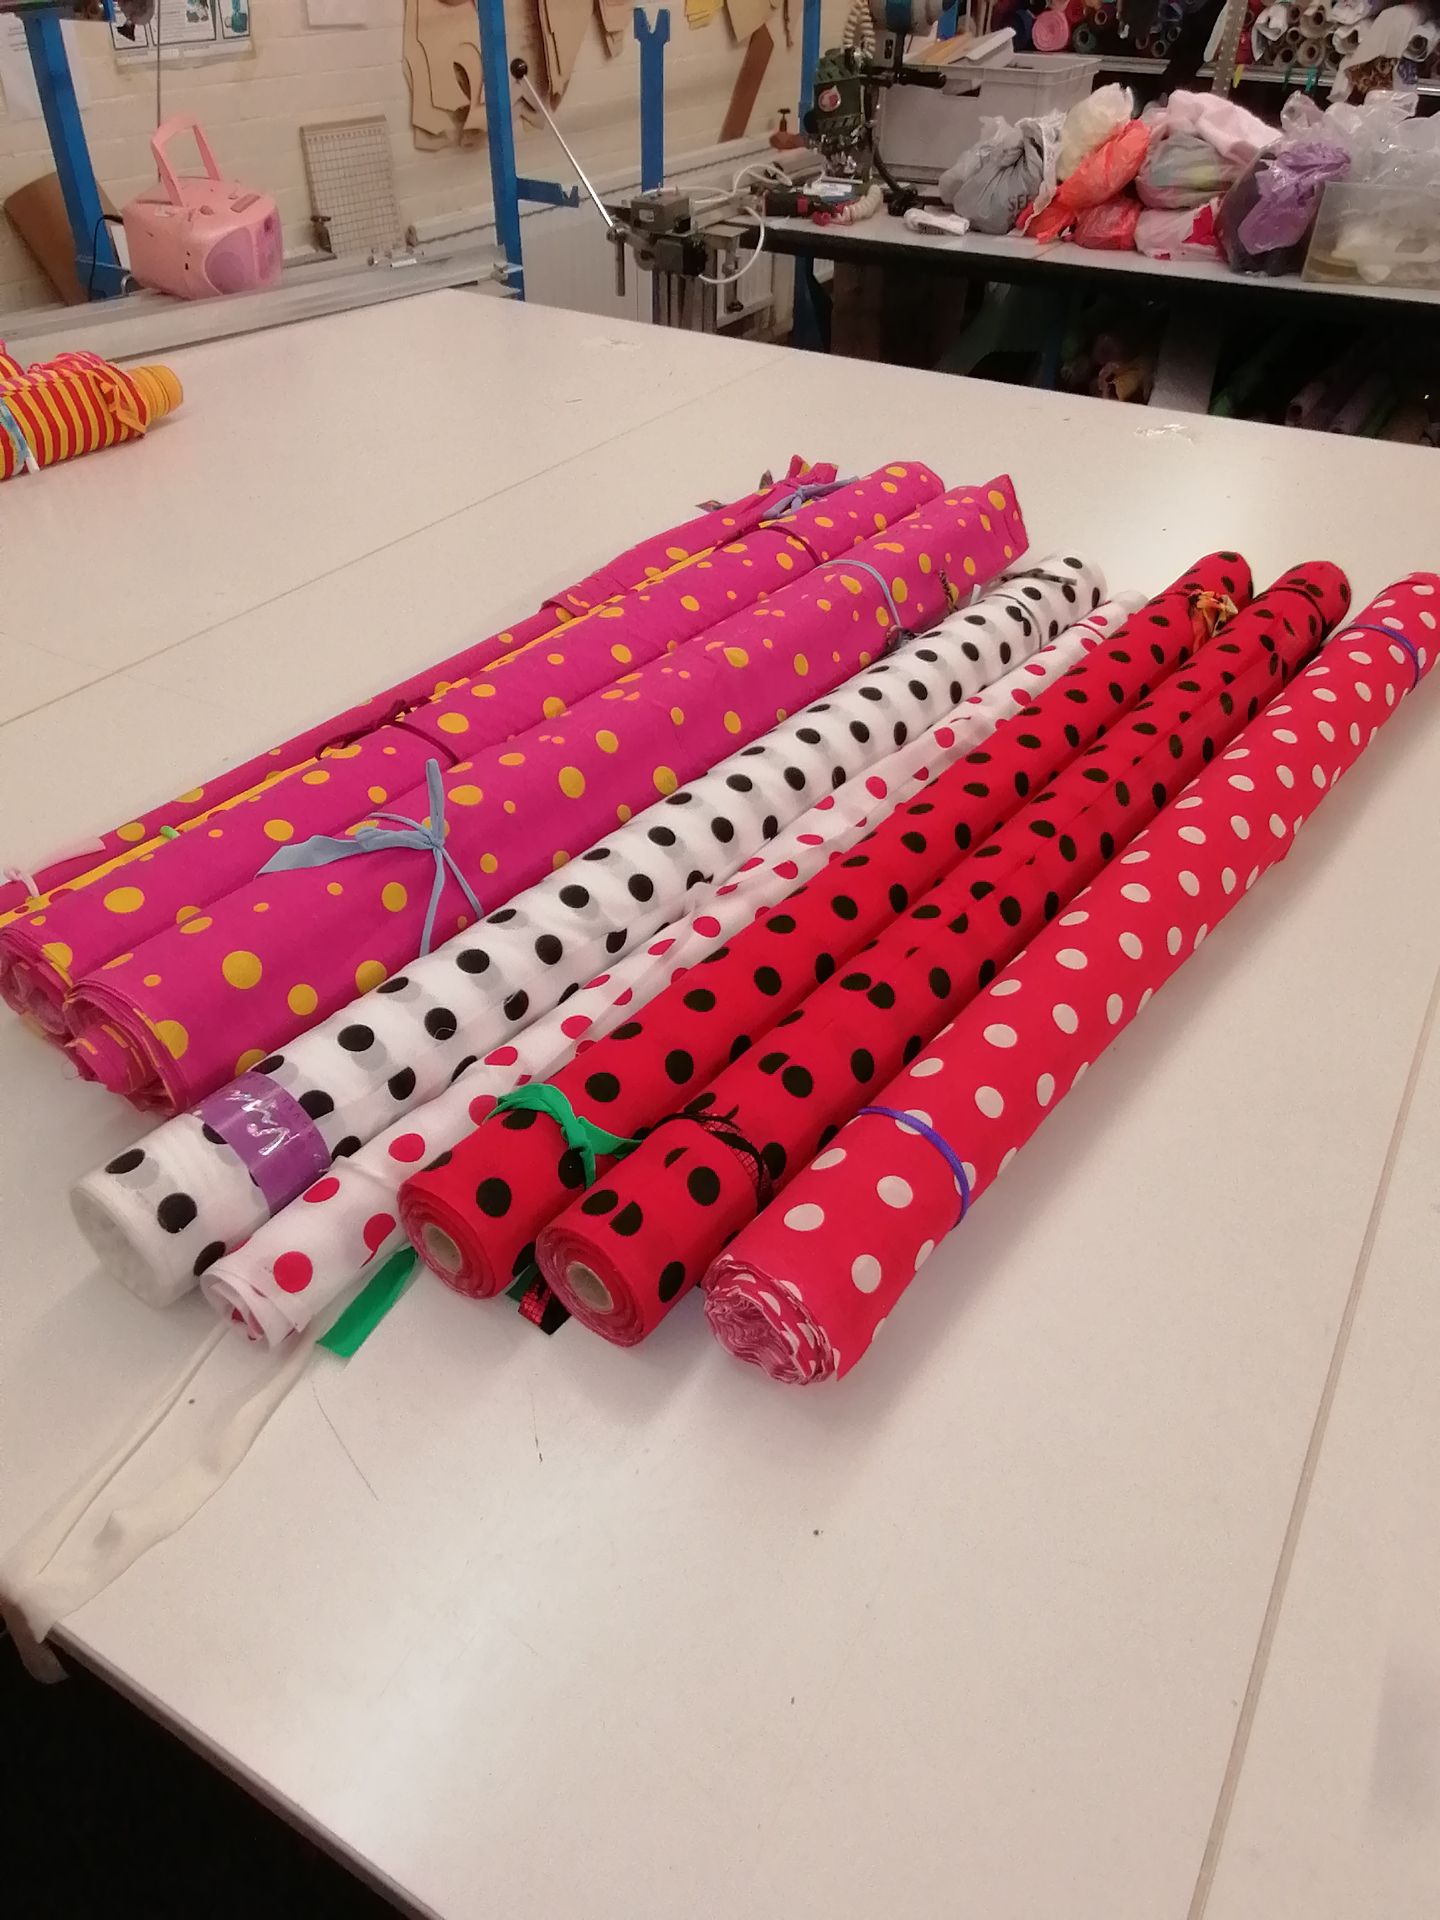 9 x Rolls of polka dot printed fabric . Estimated 100+ linear meters RRP £18-20 per meter